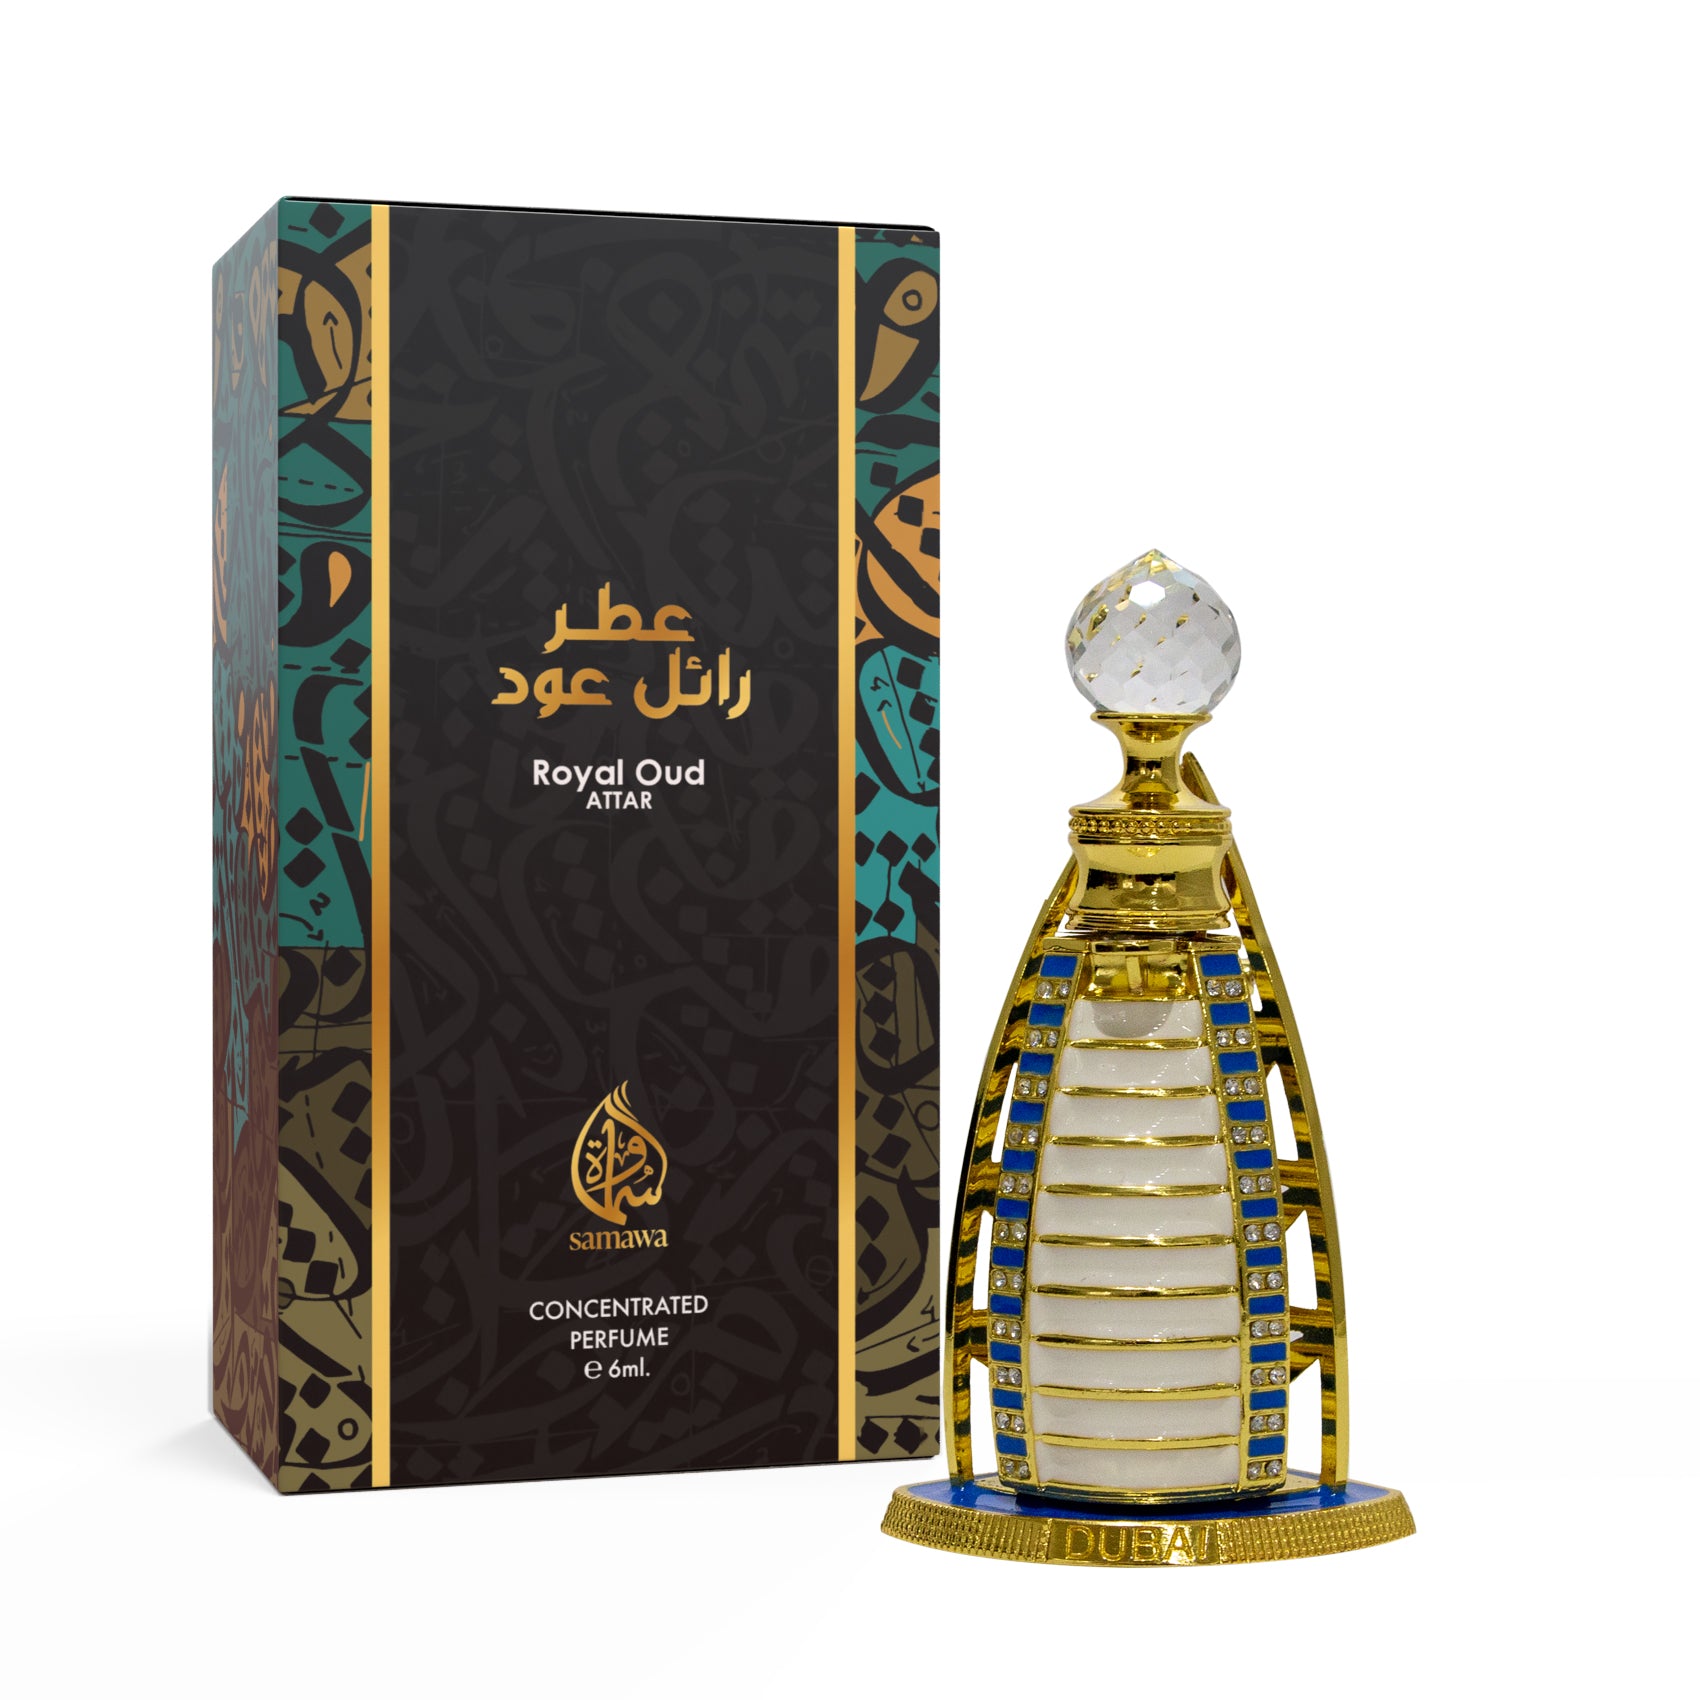 Samawa Royal Oud Concentrated Perfume Oil 6ml